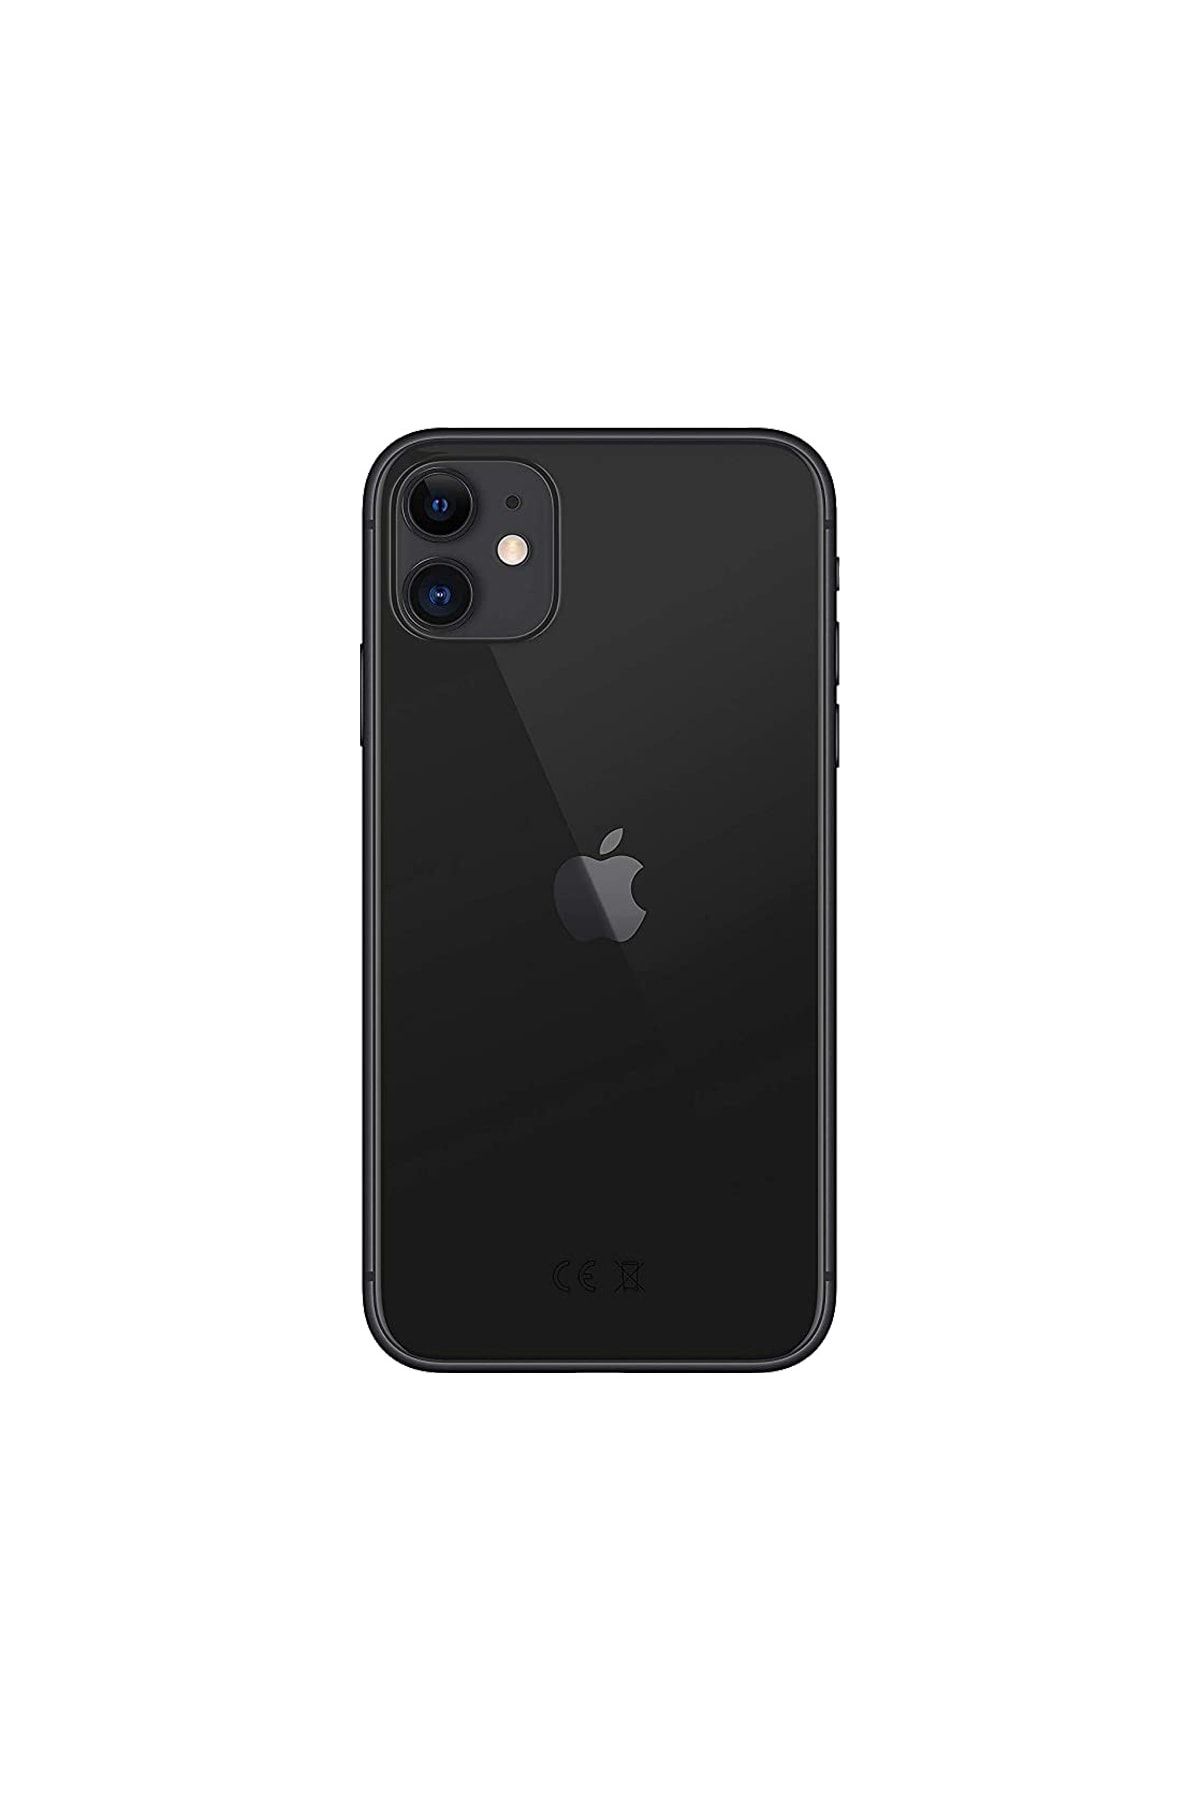 Apple Yenilenmiş iPhone 11 64 GB Siyah Cep Telefonu (12 Ay Garantili) - C Kalite